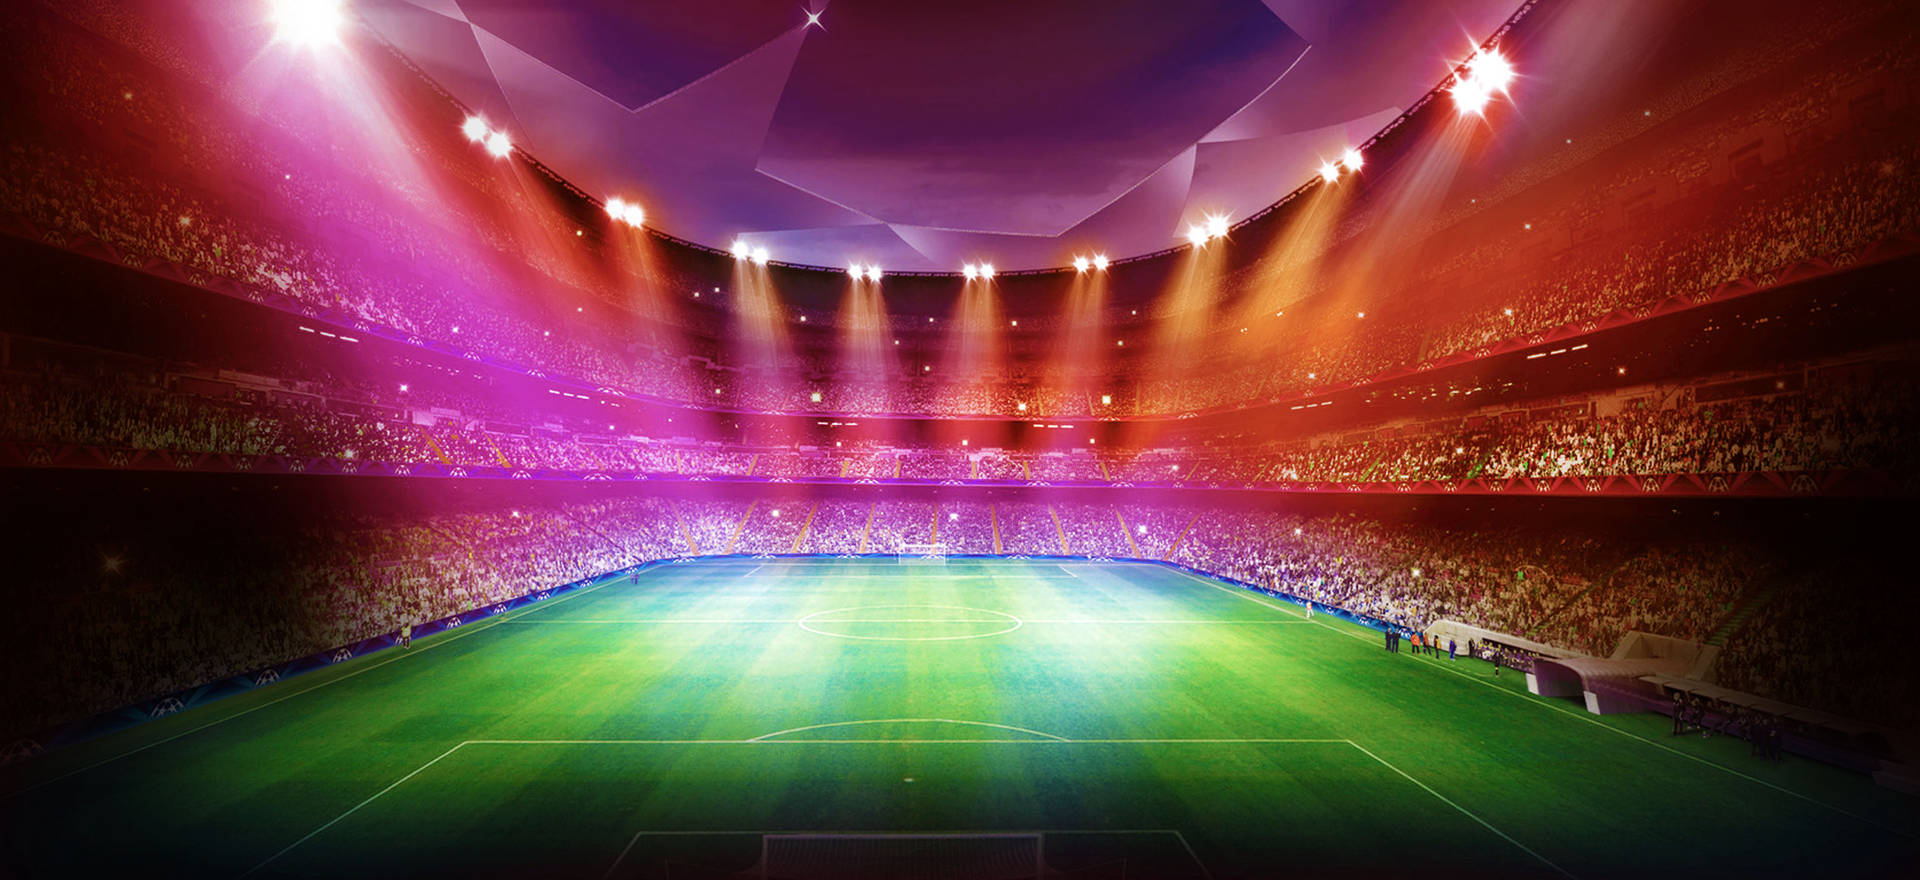 Football Stadium Reddish Pink Lights Background